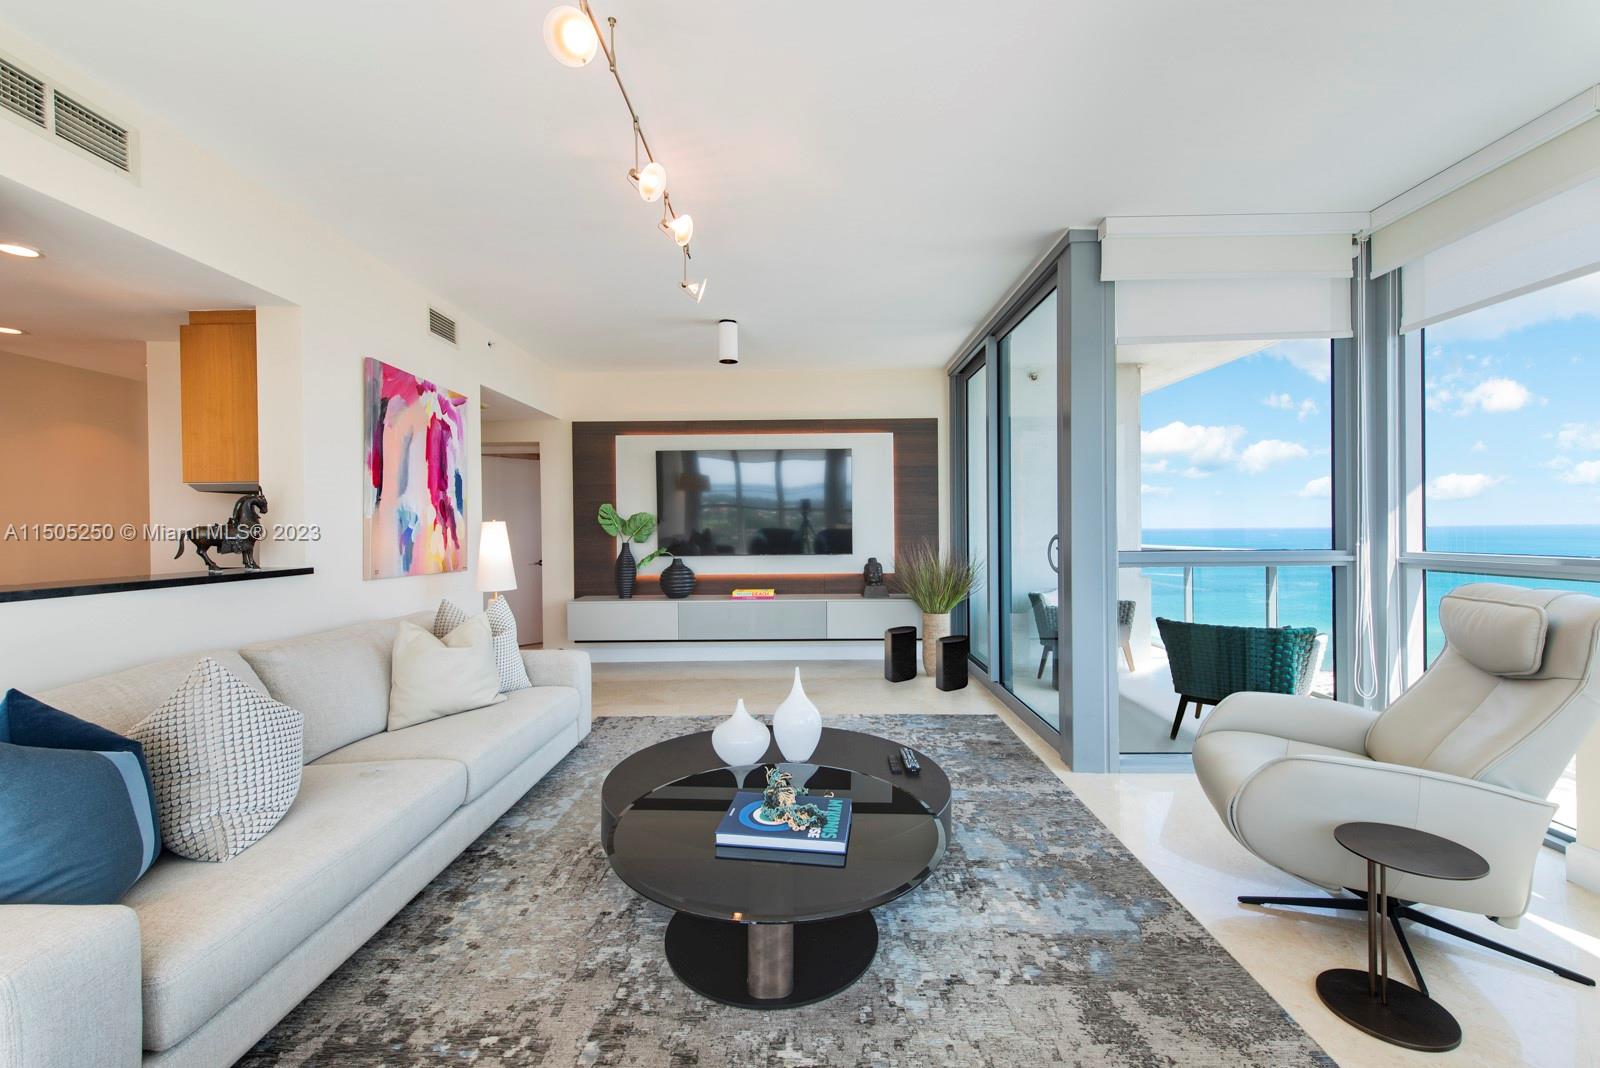 Rental Property at 101 20th St 3002, Miami Beach, Miami-Dade County, Florida - Bedrooms: 2 
Bathrooms: 2  - $30,000 MO.